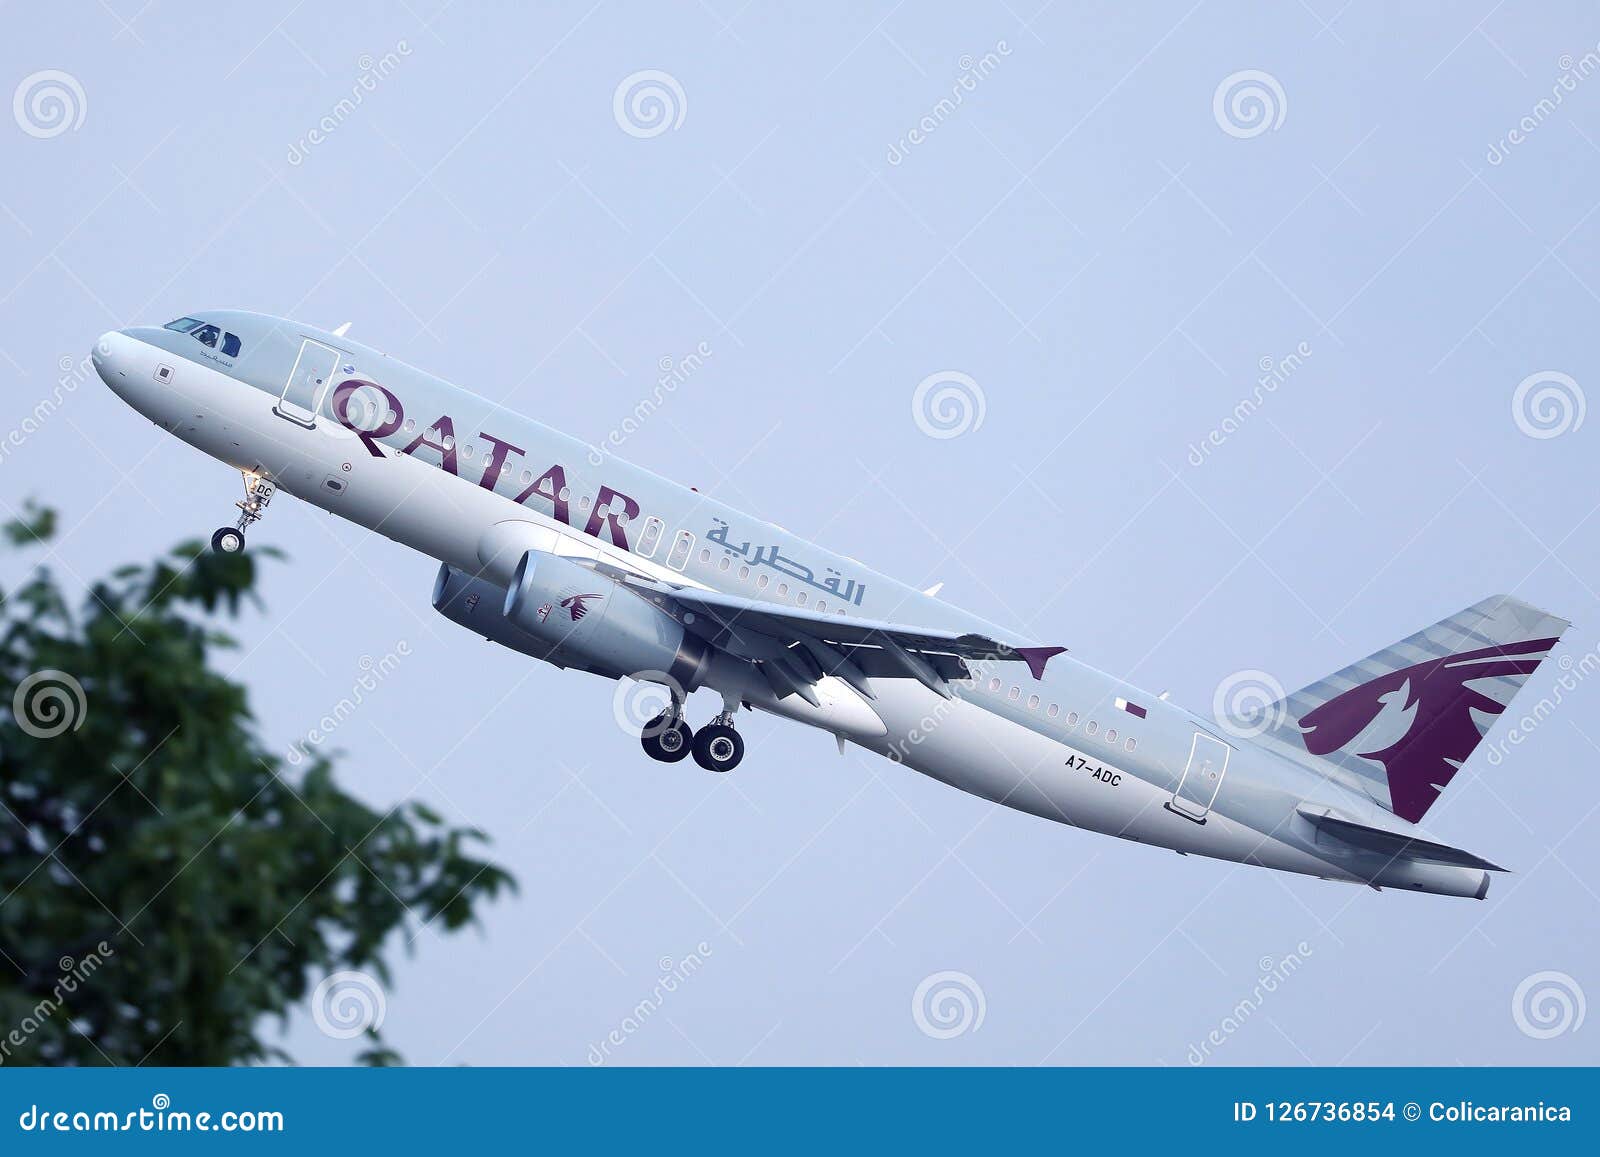 Holidays qatar airways Contact Us